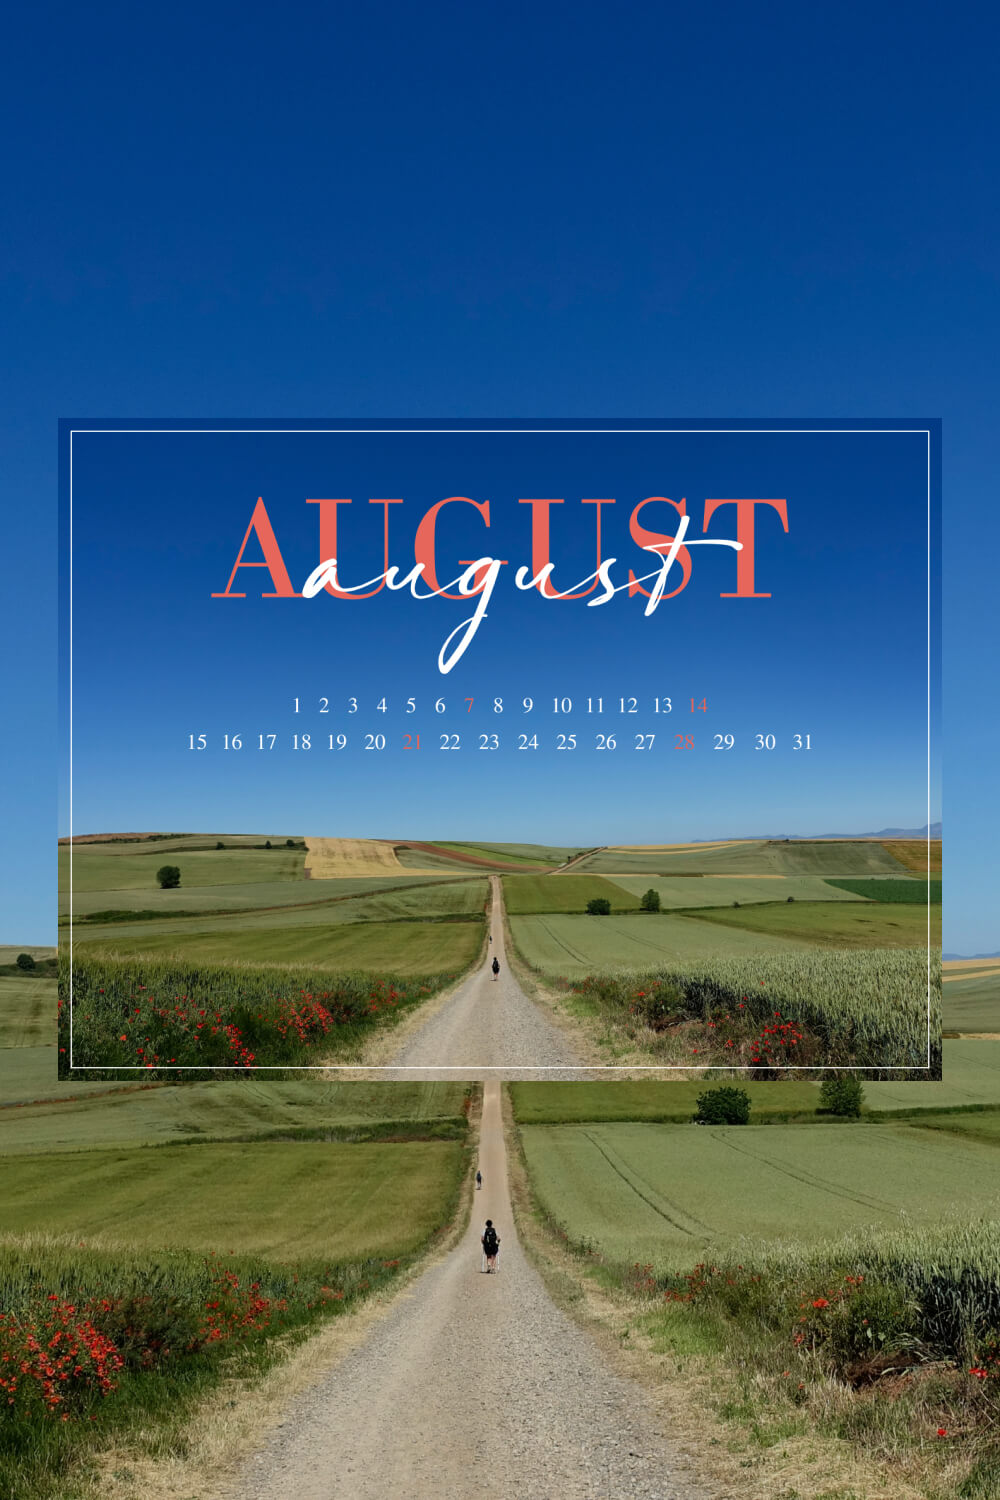 Free Editable Calendar Road In Fields Pinterest Image.